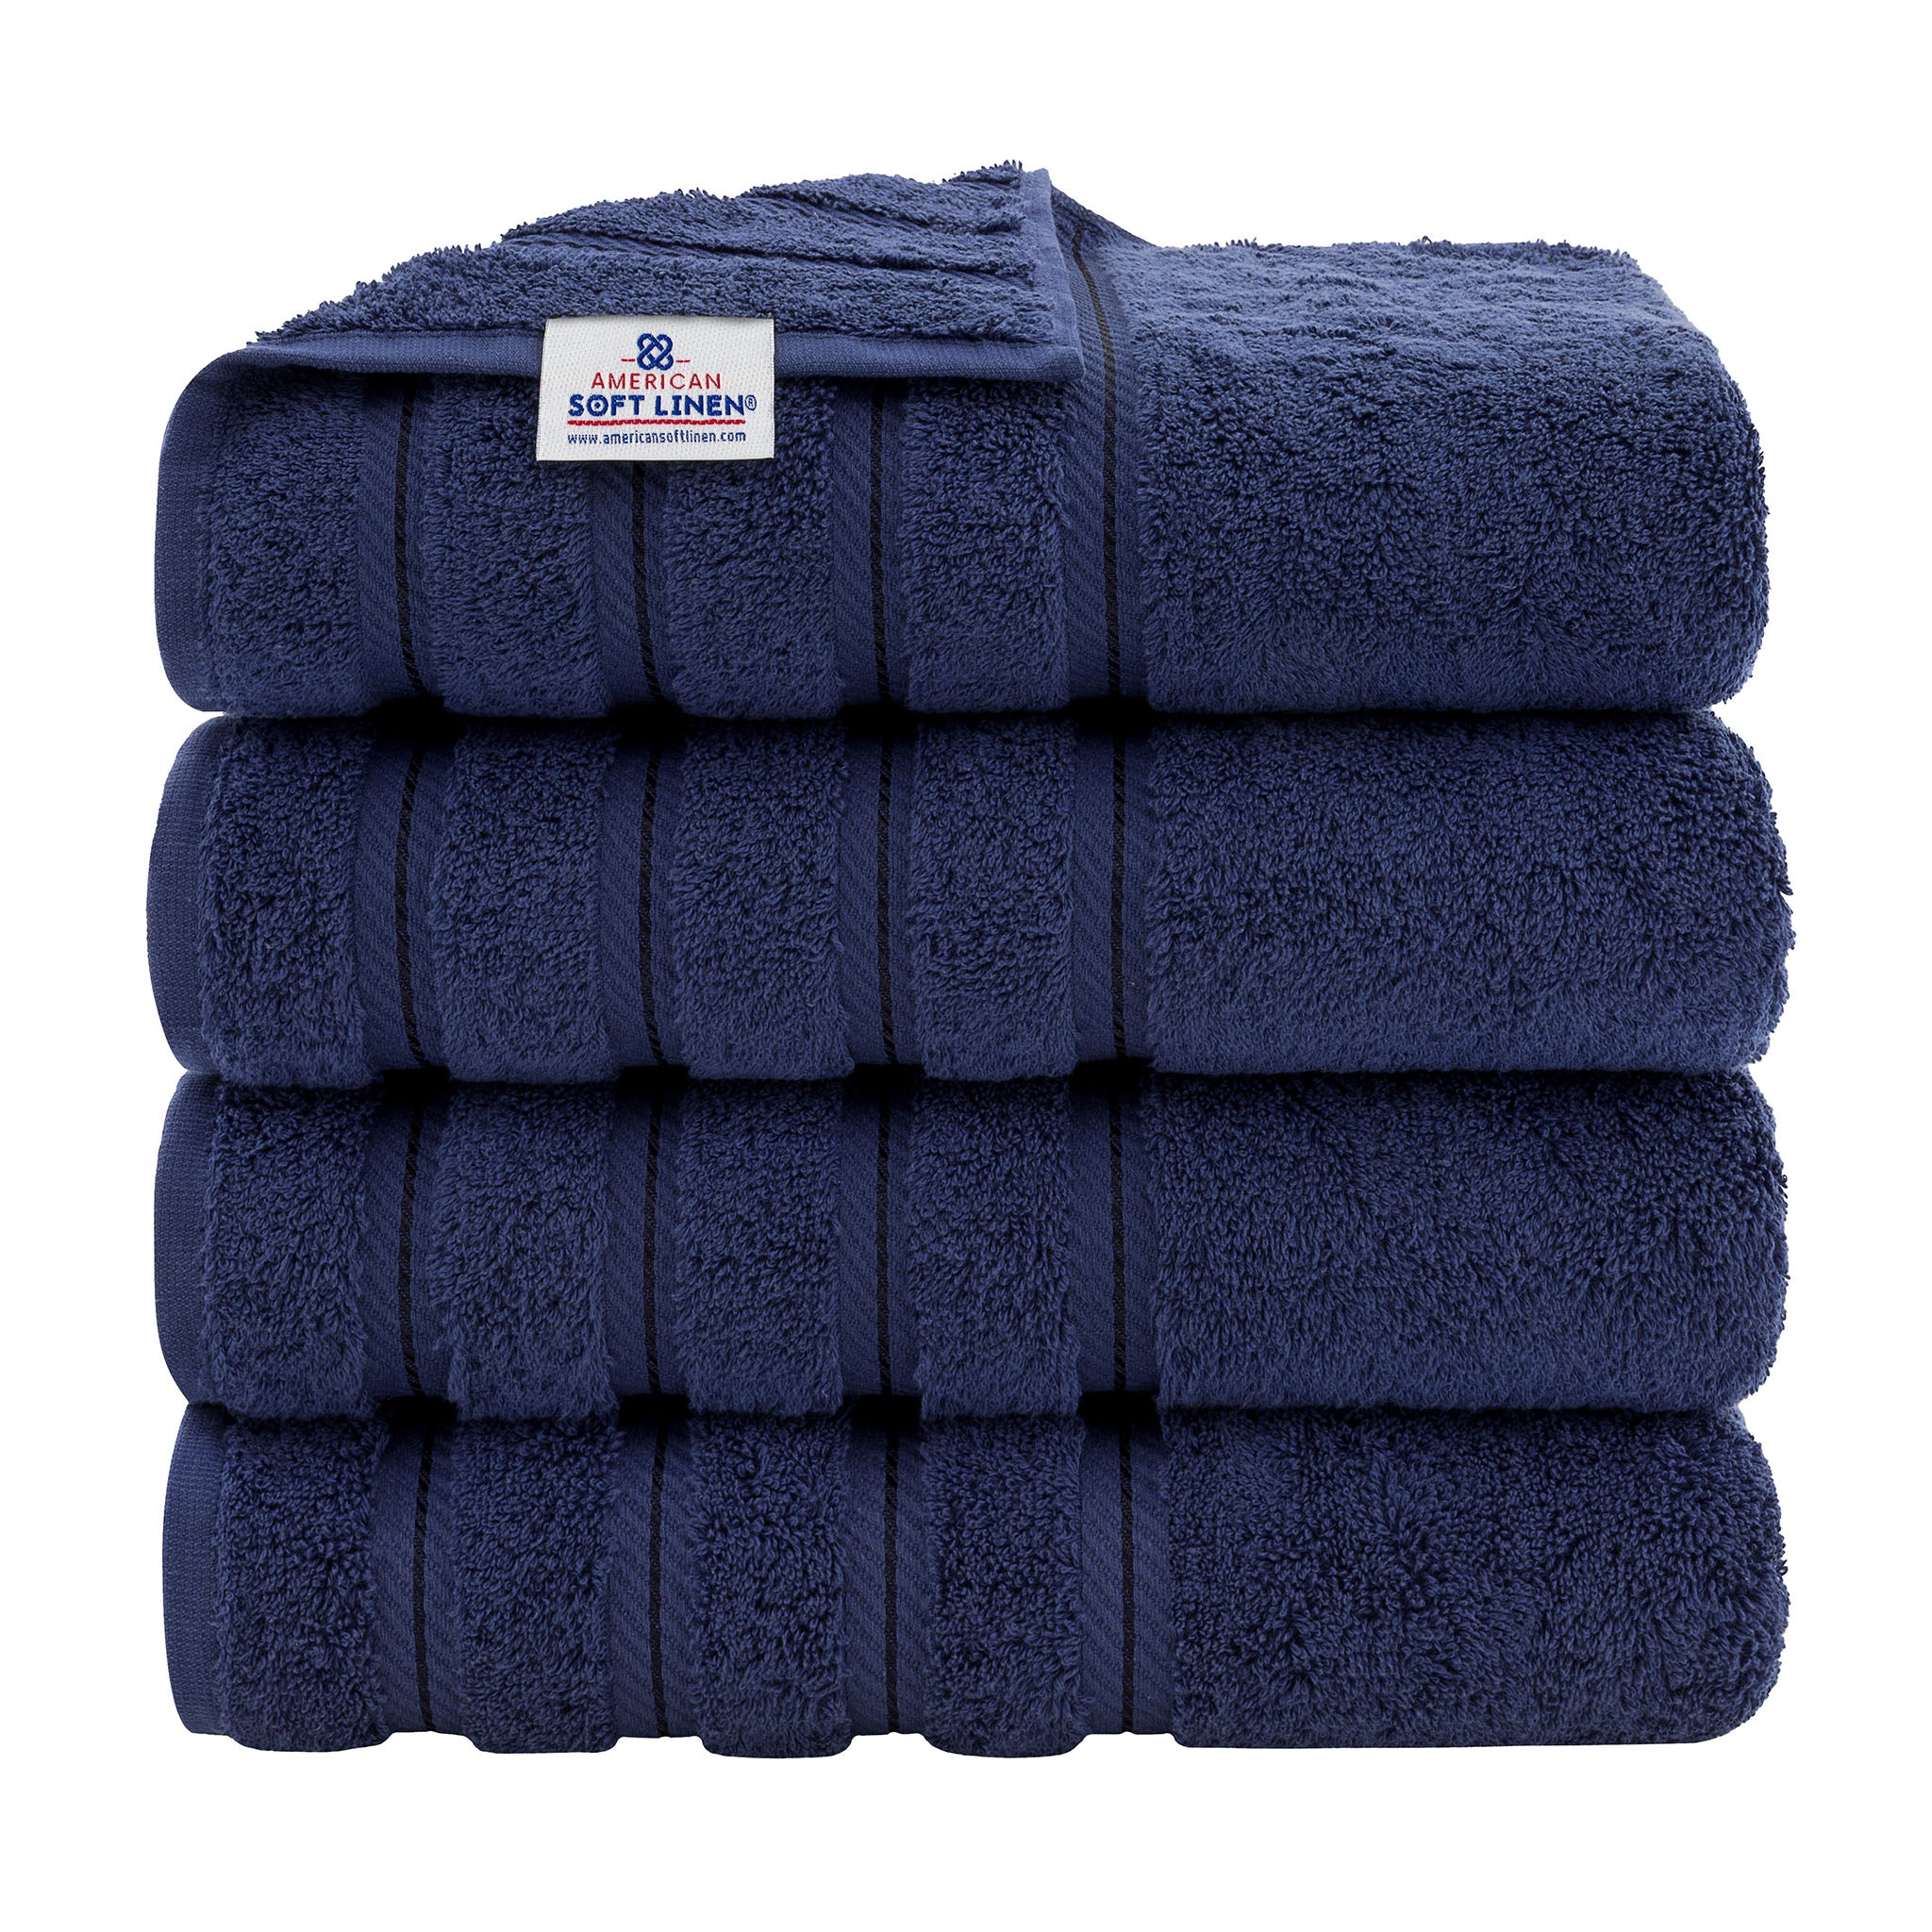 American Soft Linen 100% Turkish Cotton 4 Pack Bath Towel Set navy-blue-1